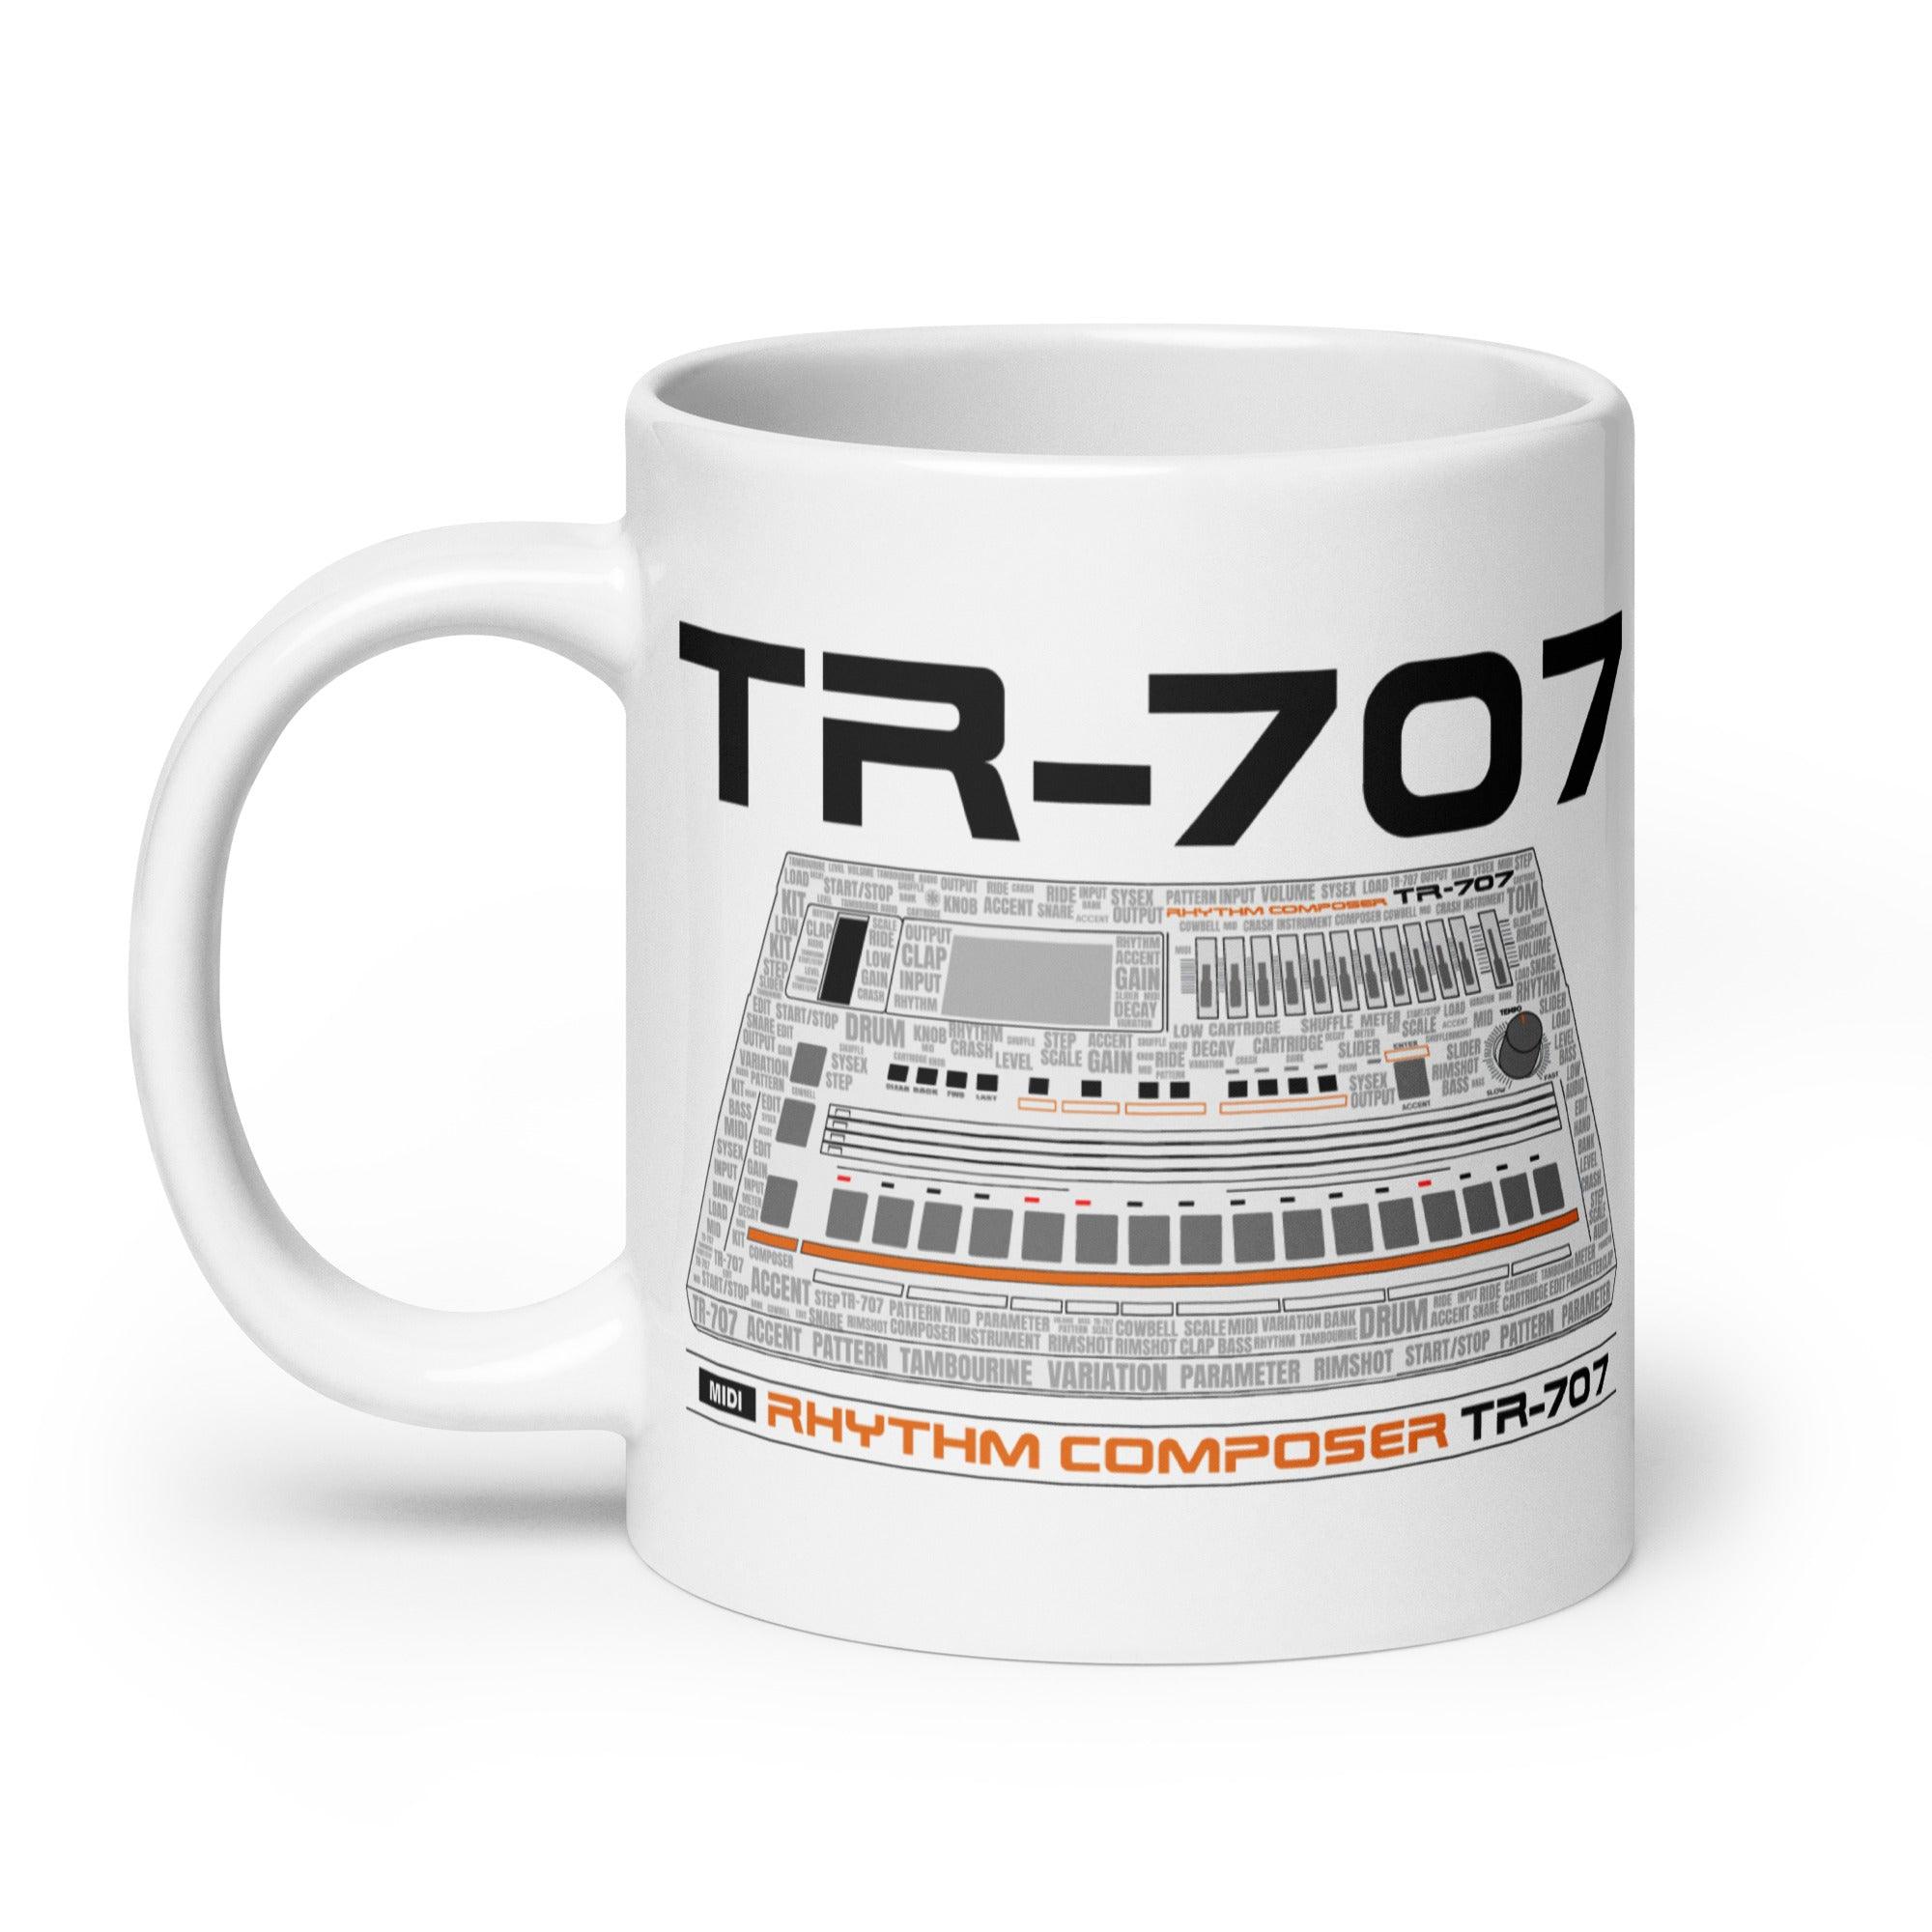 Roland® TR-707 Inspired Design | Vintage Drum Machine | TR707 Rhythm Composer Word Cloud White Glossy Mug (11oz.-20oz.) - Tedeschi Studio, LLC.